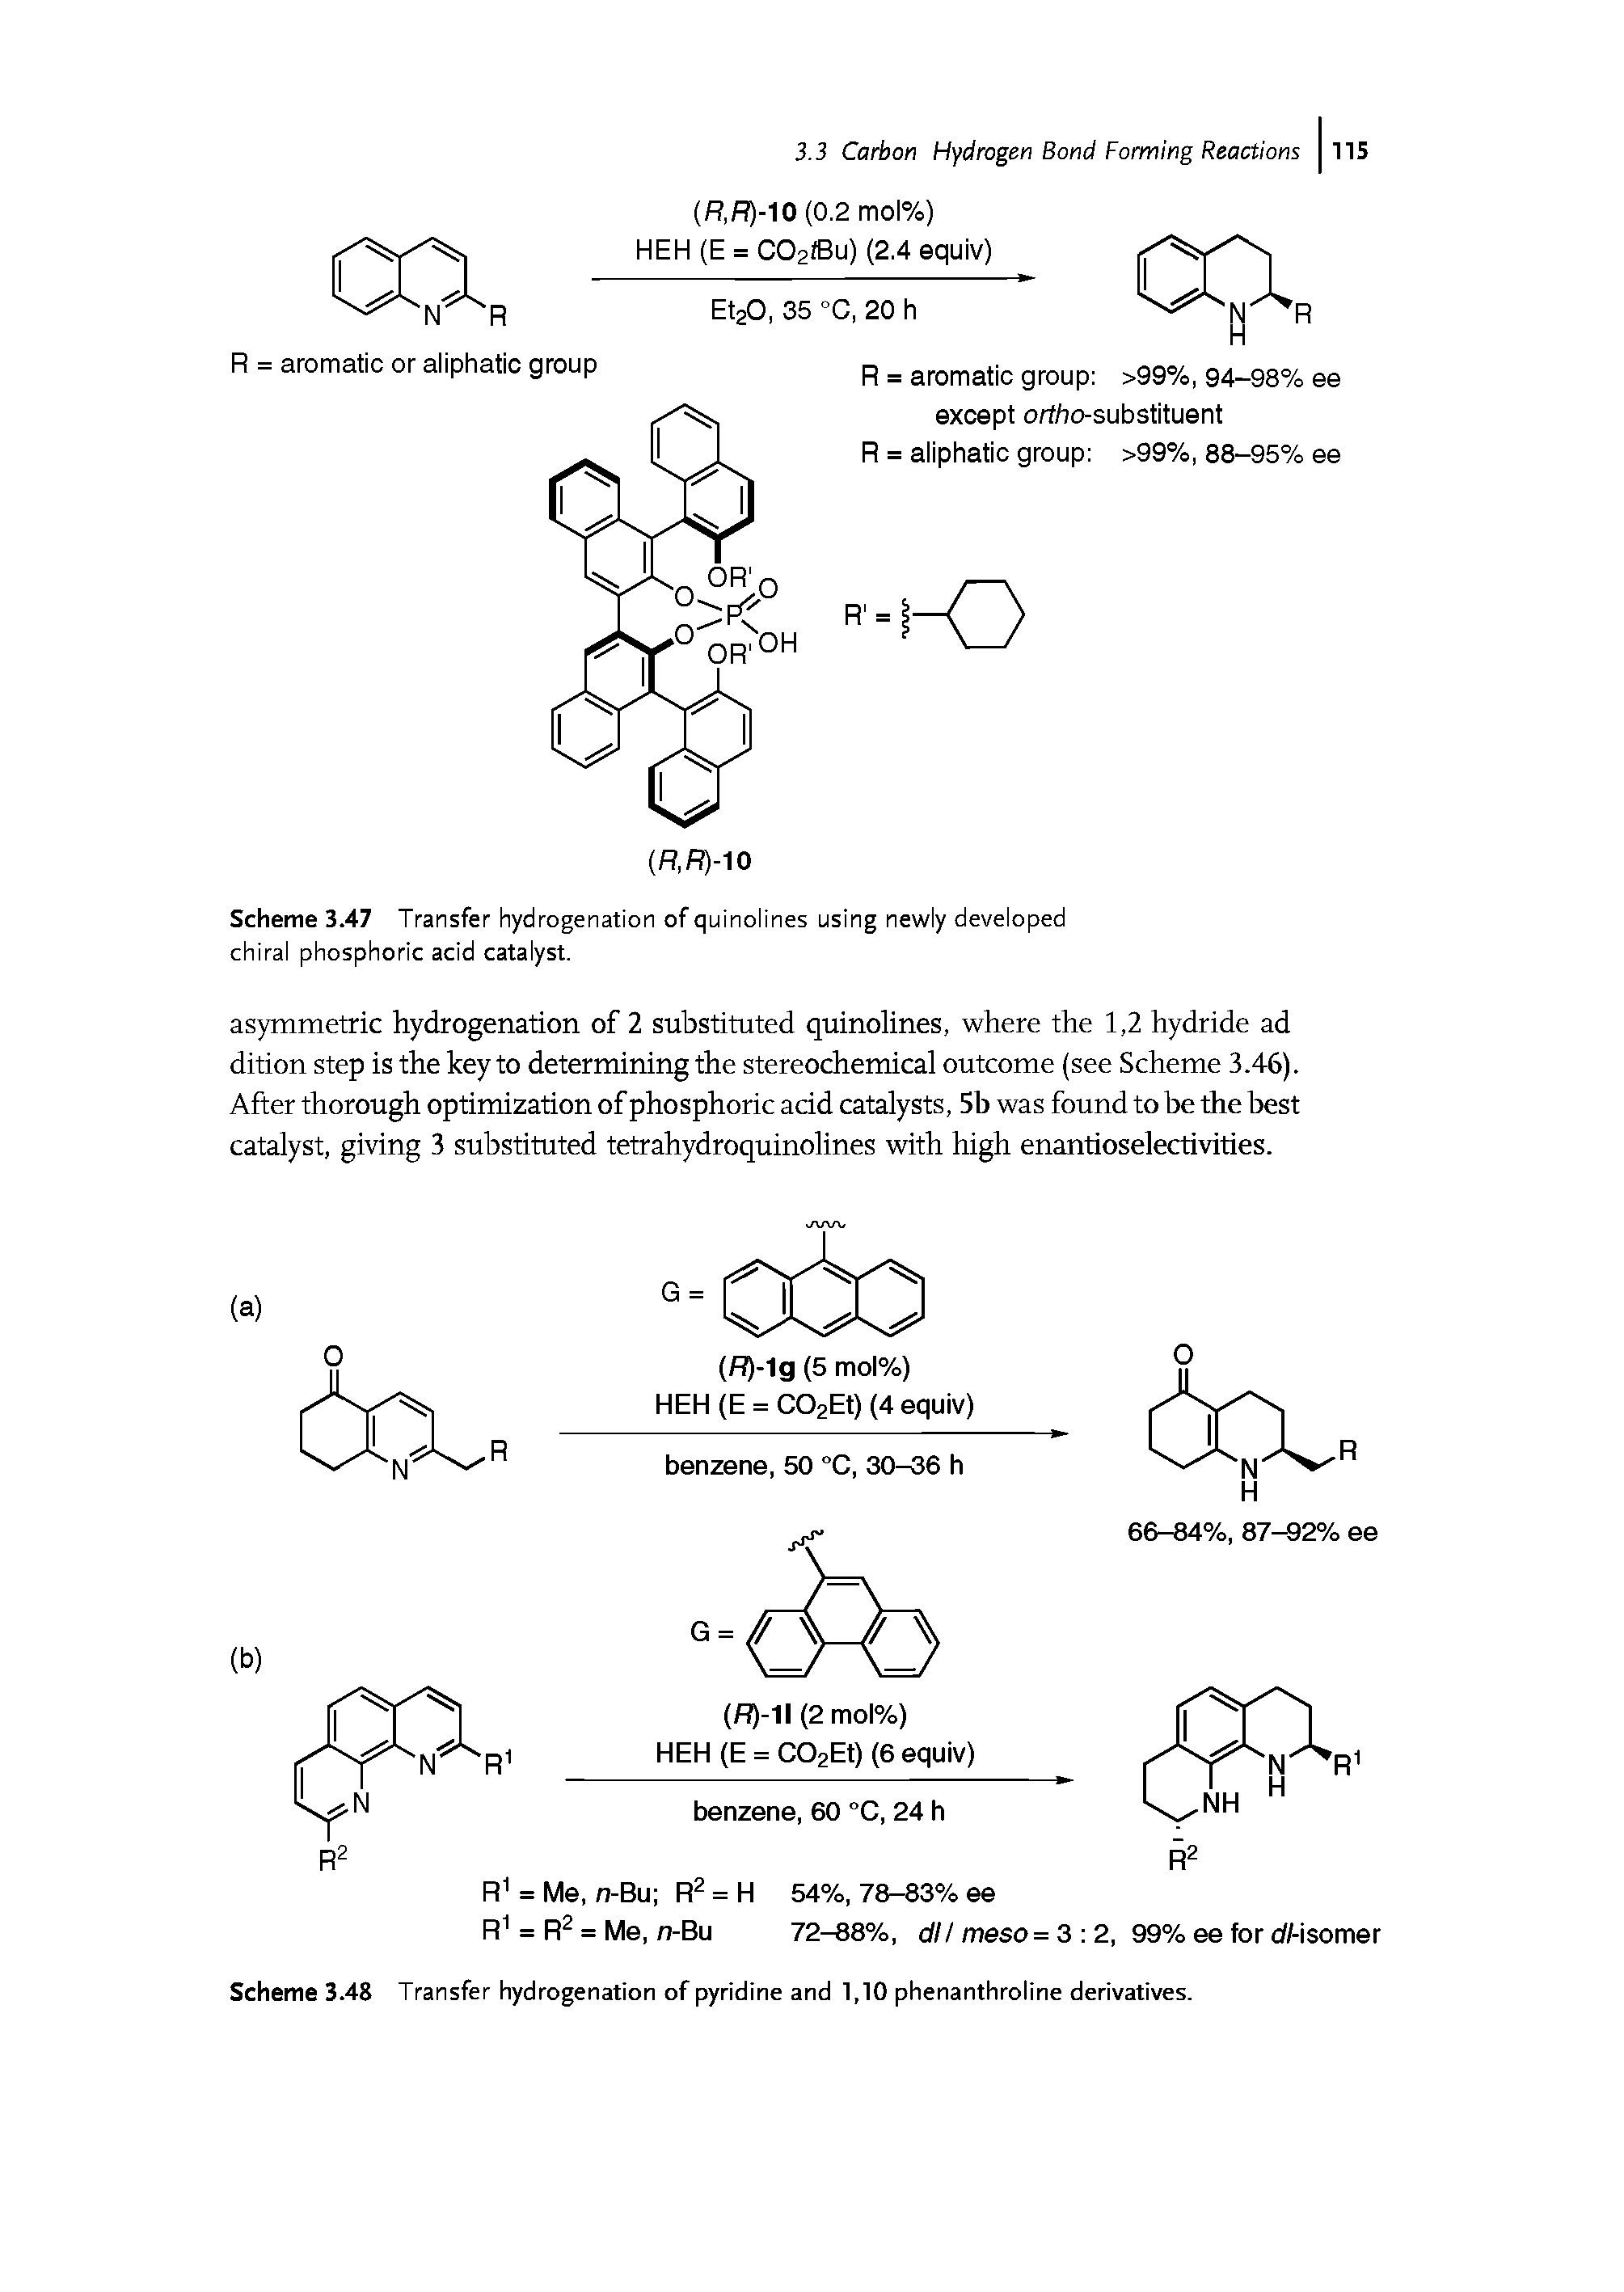 Scheme 3.48 Transfer hydrogenation of pyridine and 1,10 phenanthroline derivatives.